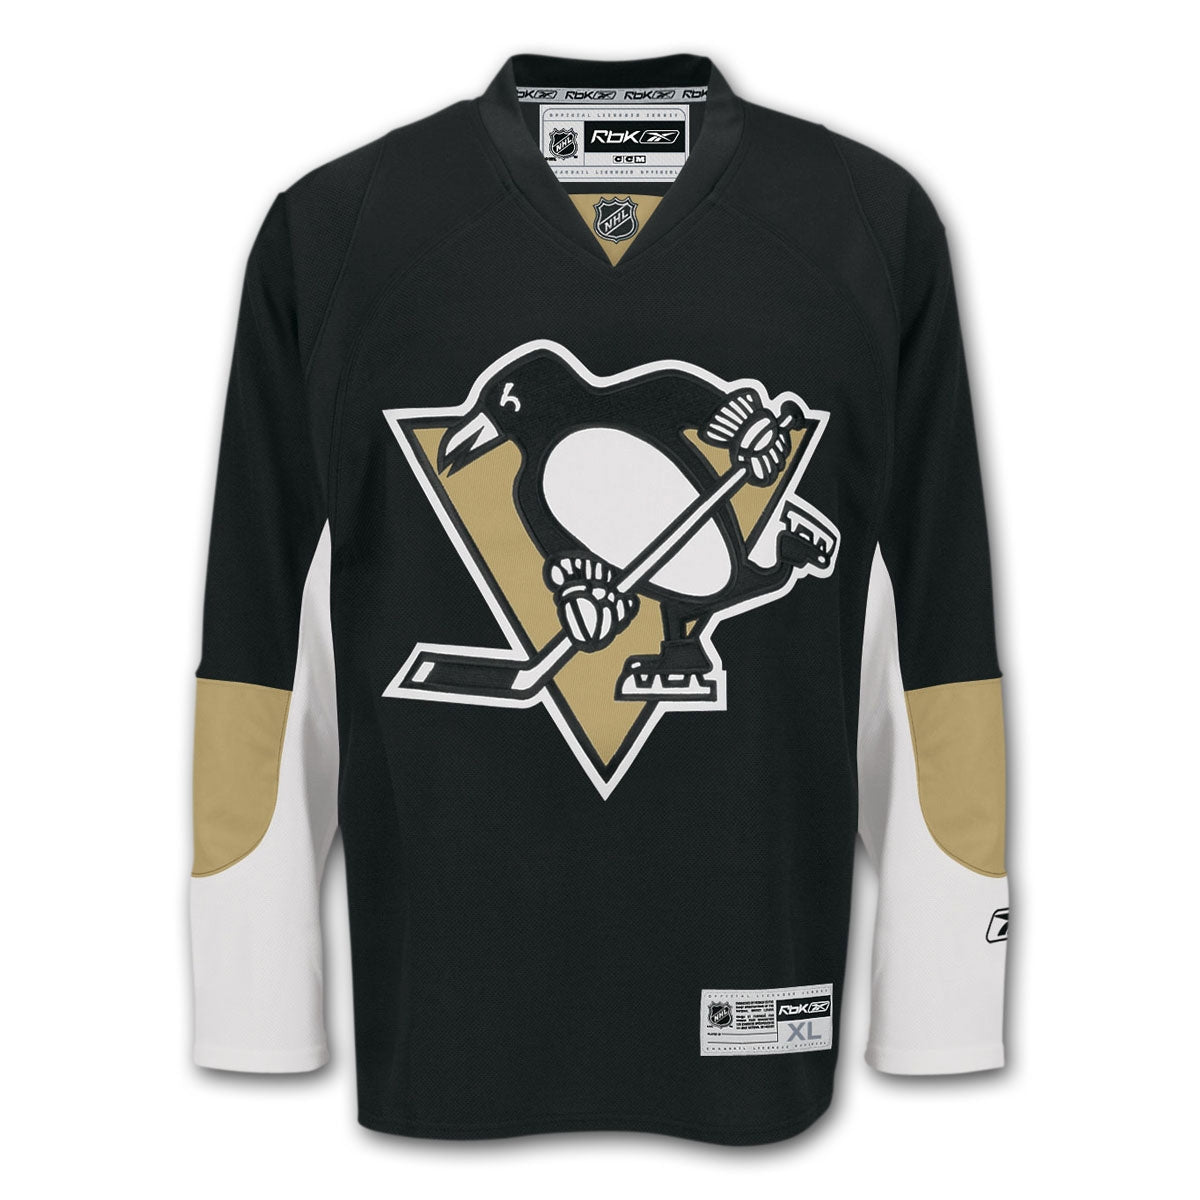 Pittsburgh Penguins Reebok Gold Practice Jersey